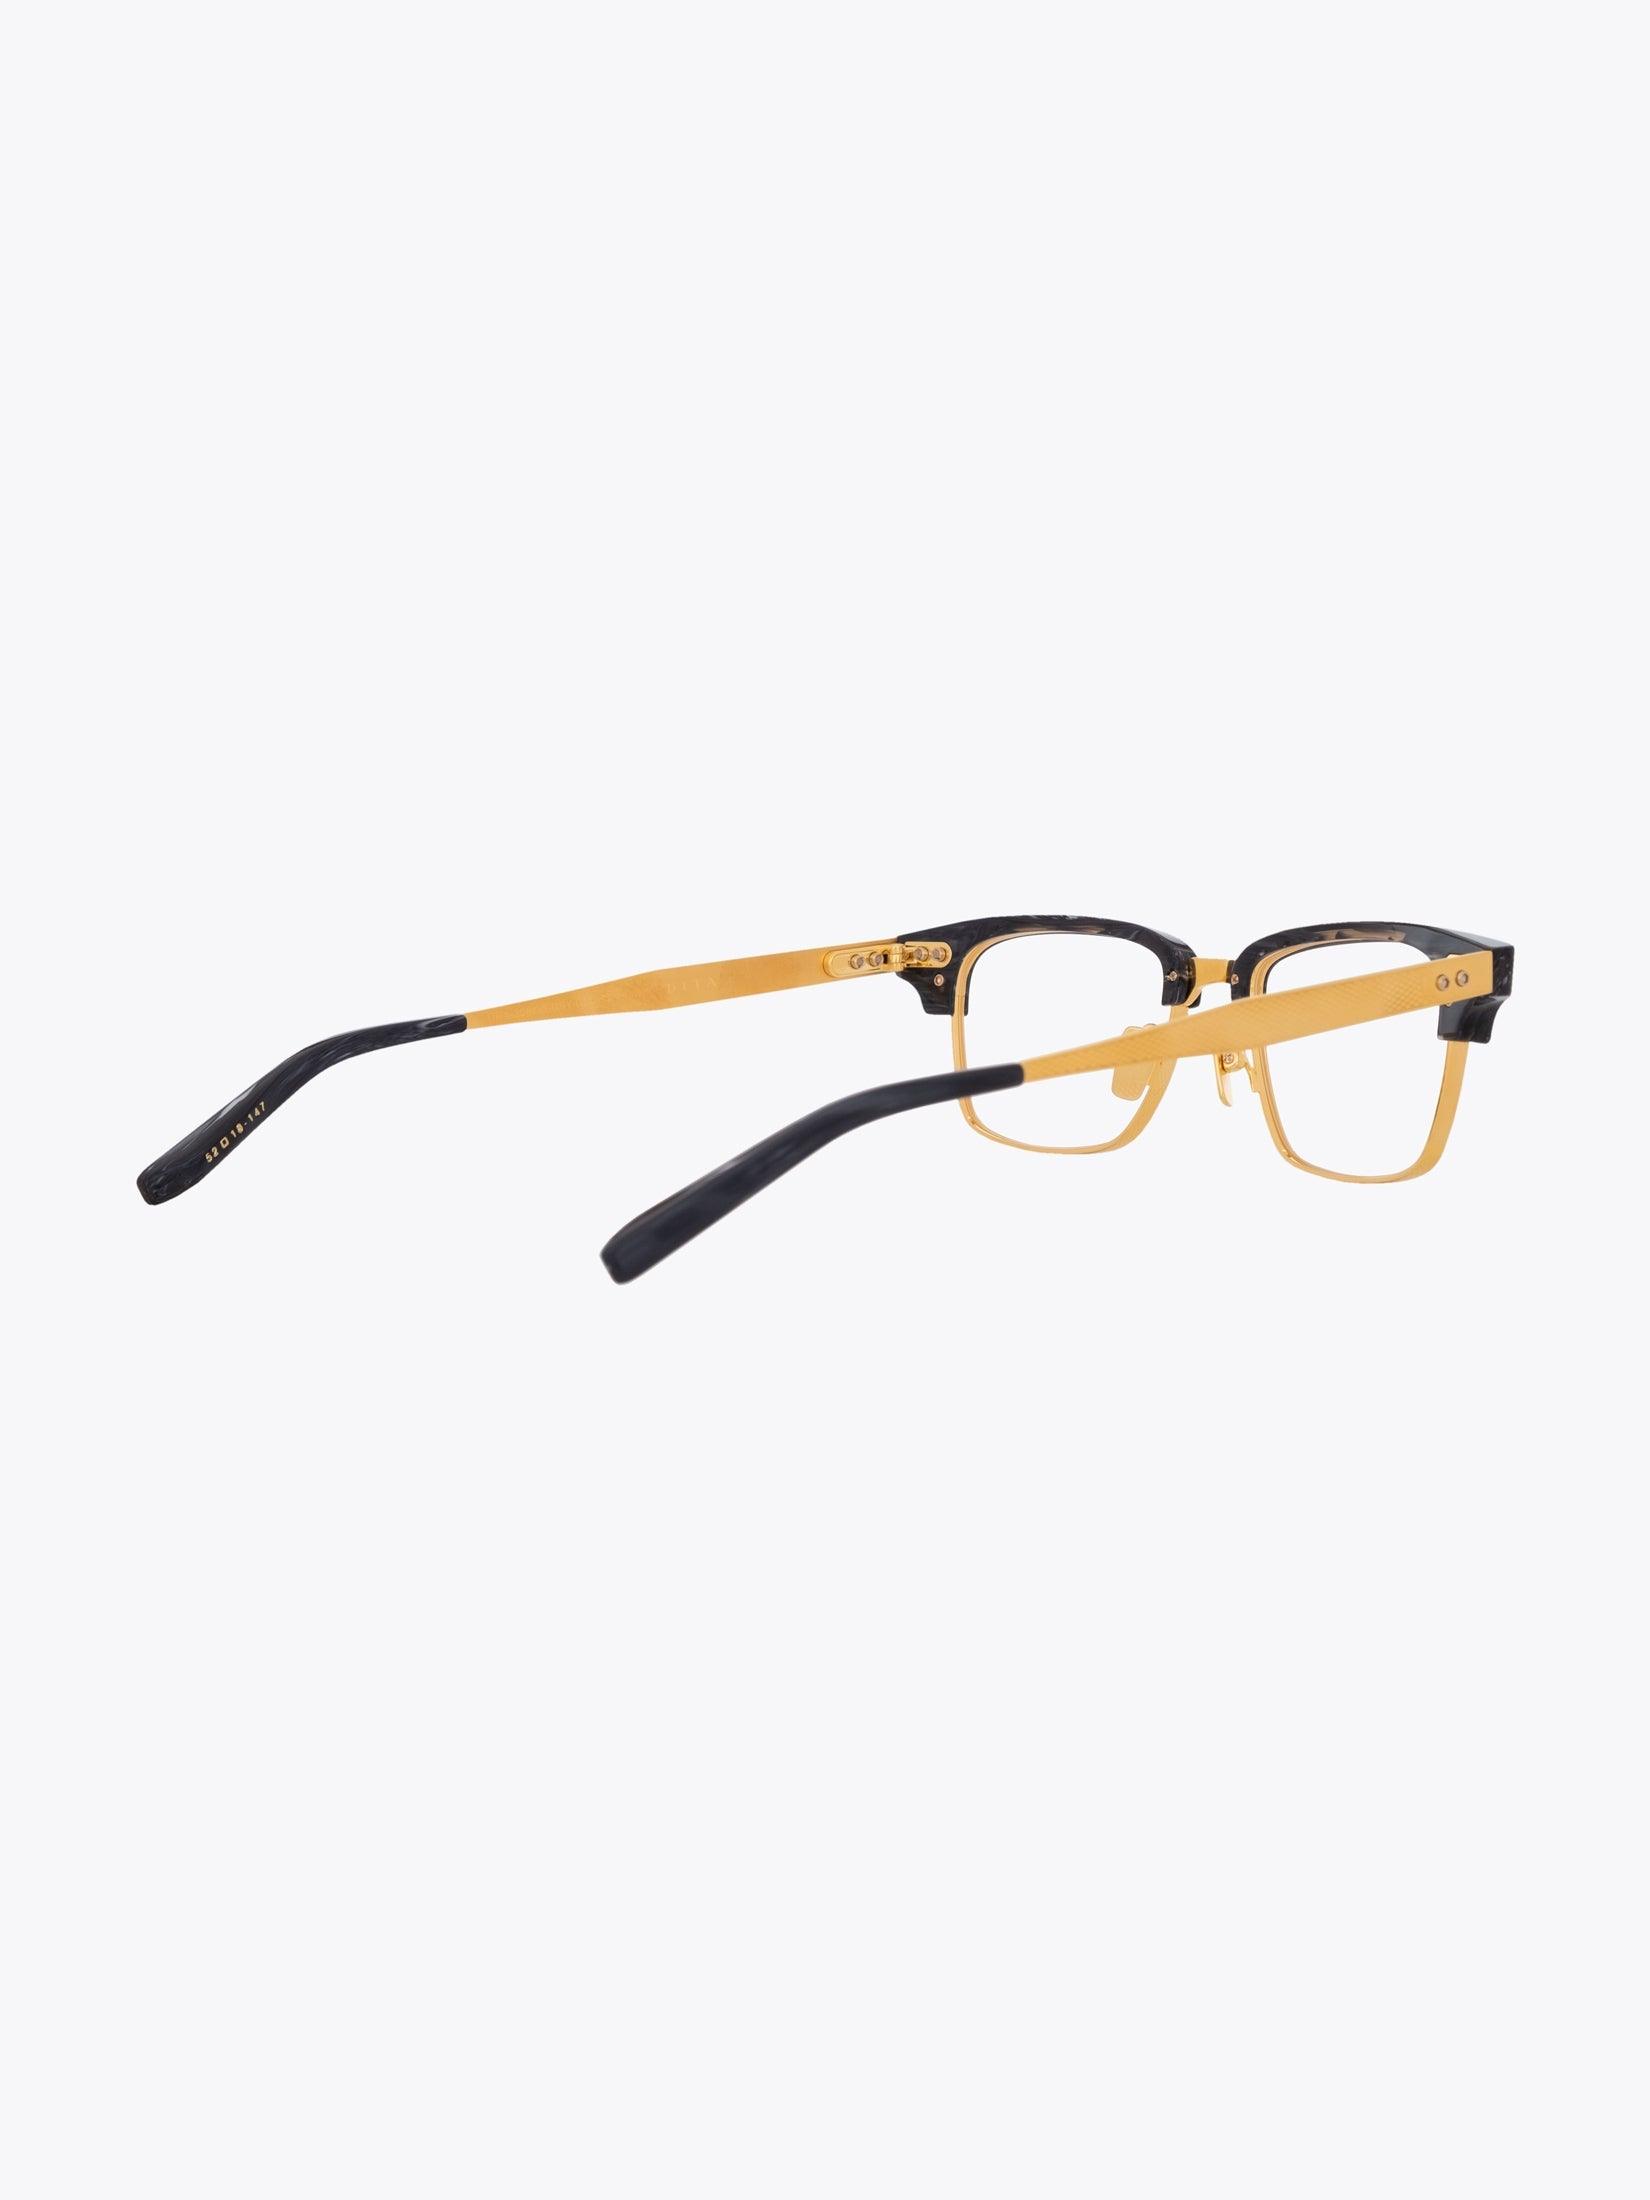 DITA Statesman Three Grey/Gold Eyeglasses